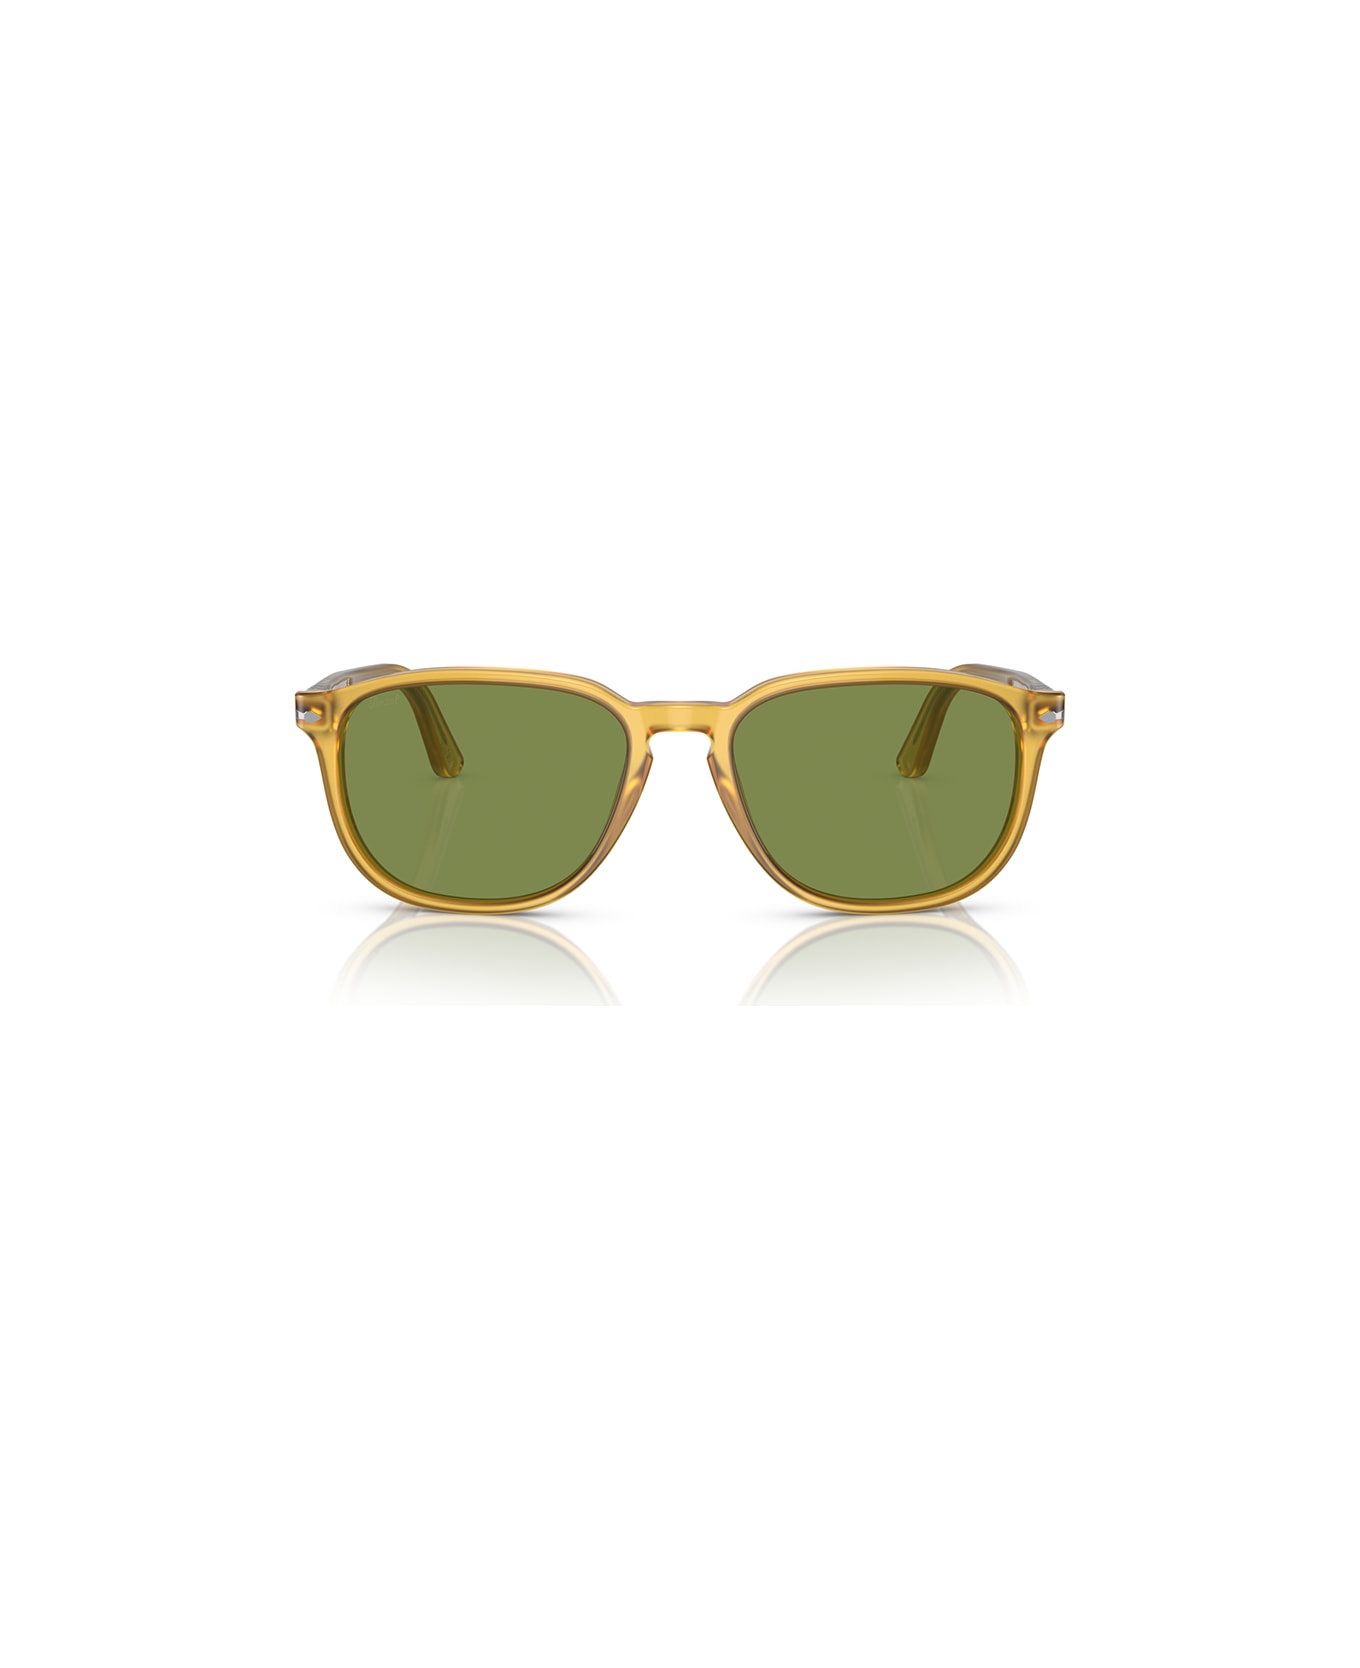 Persol Sunglasses - Miele/Verde サングラス